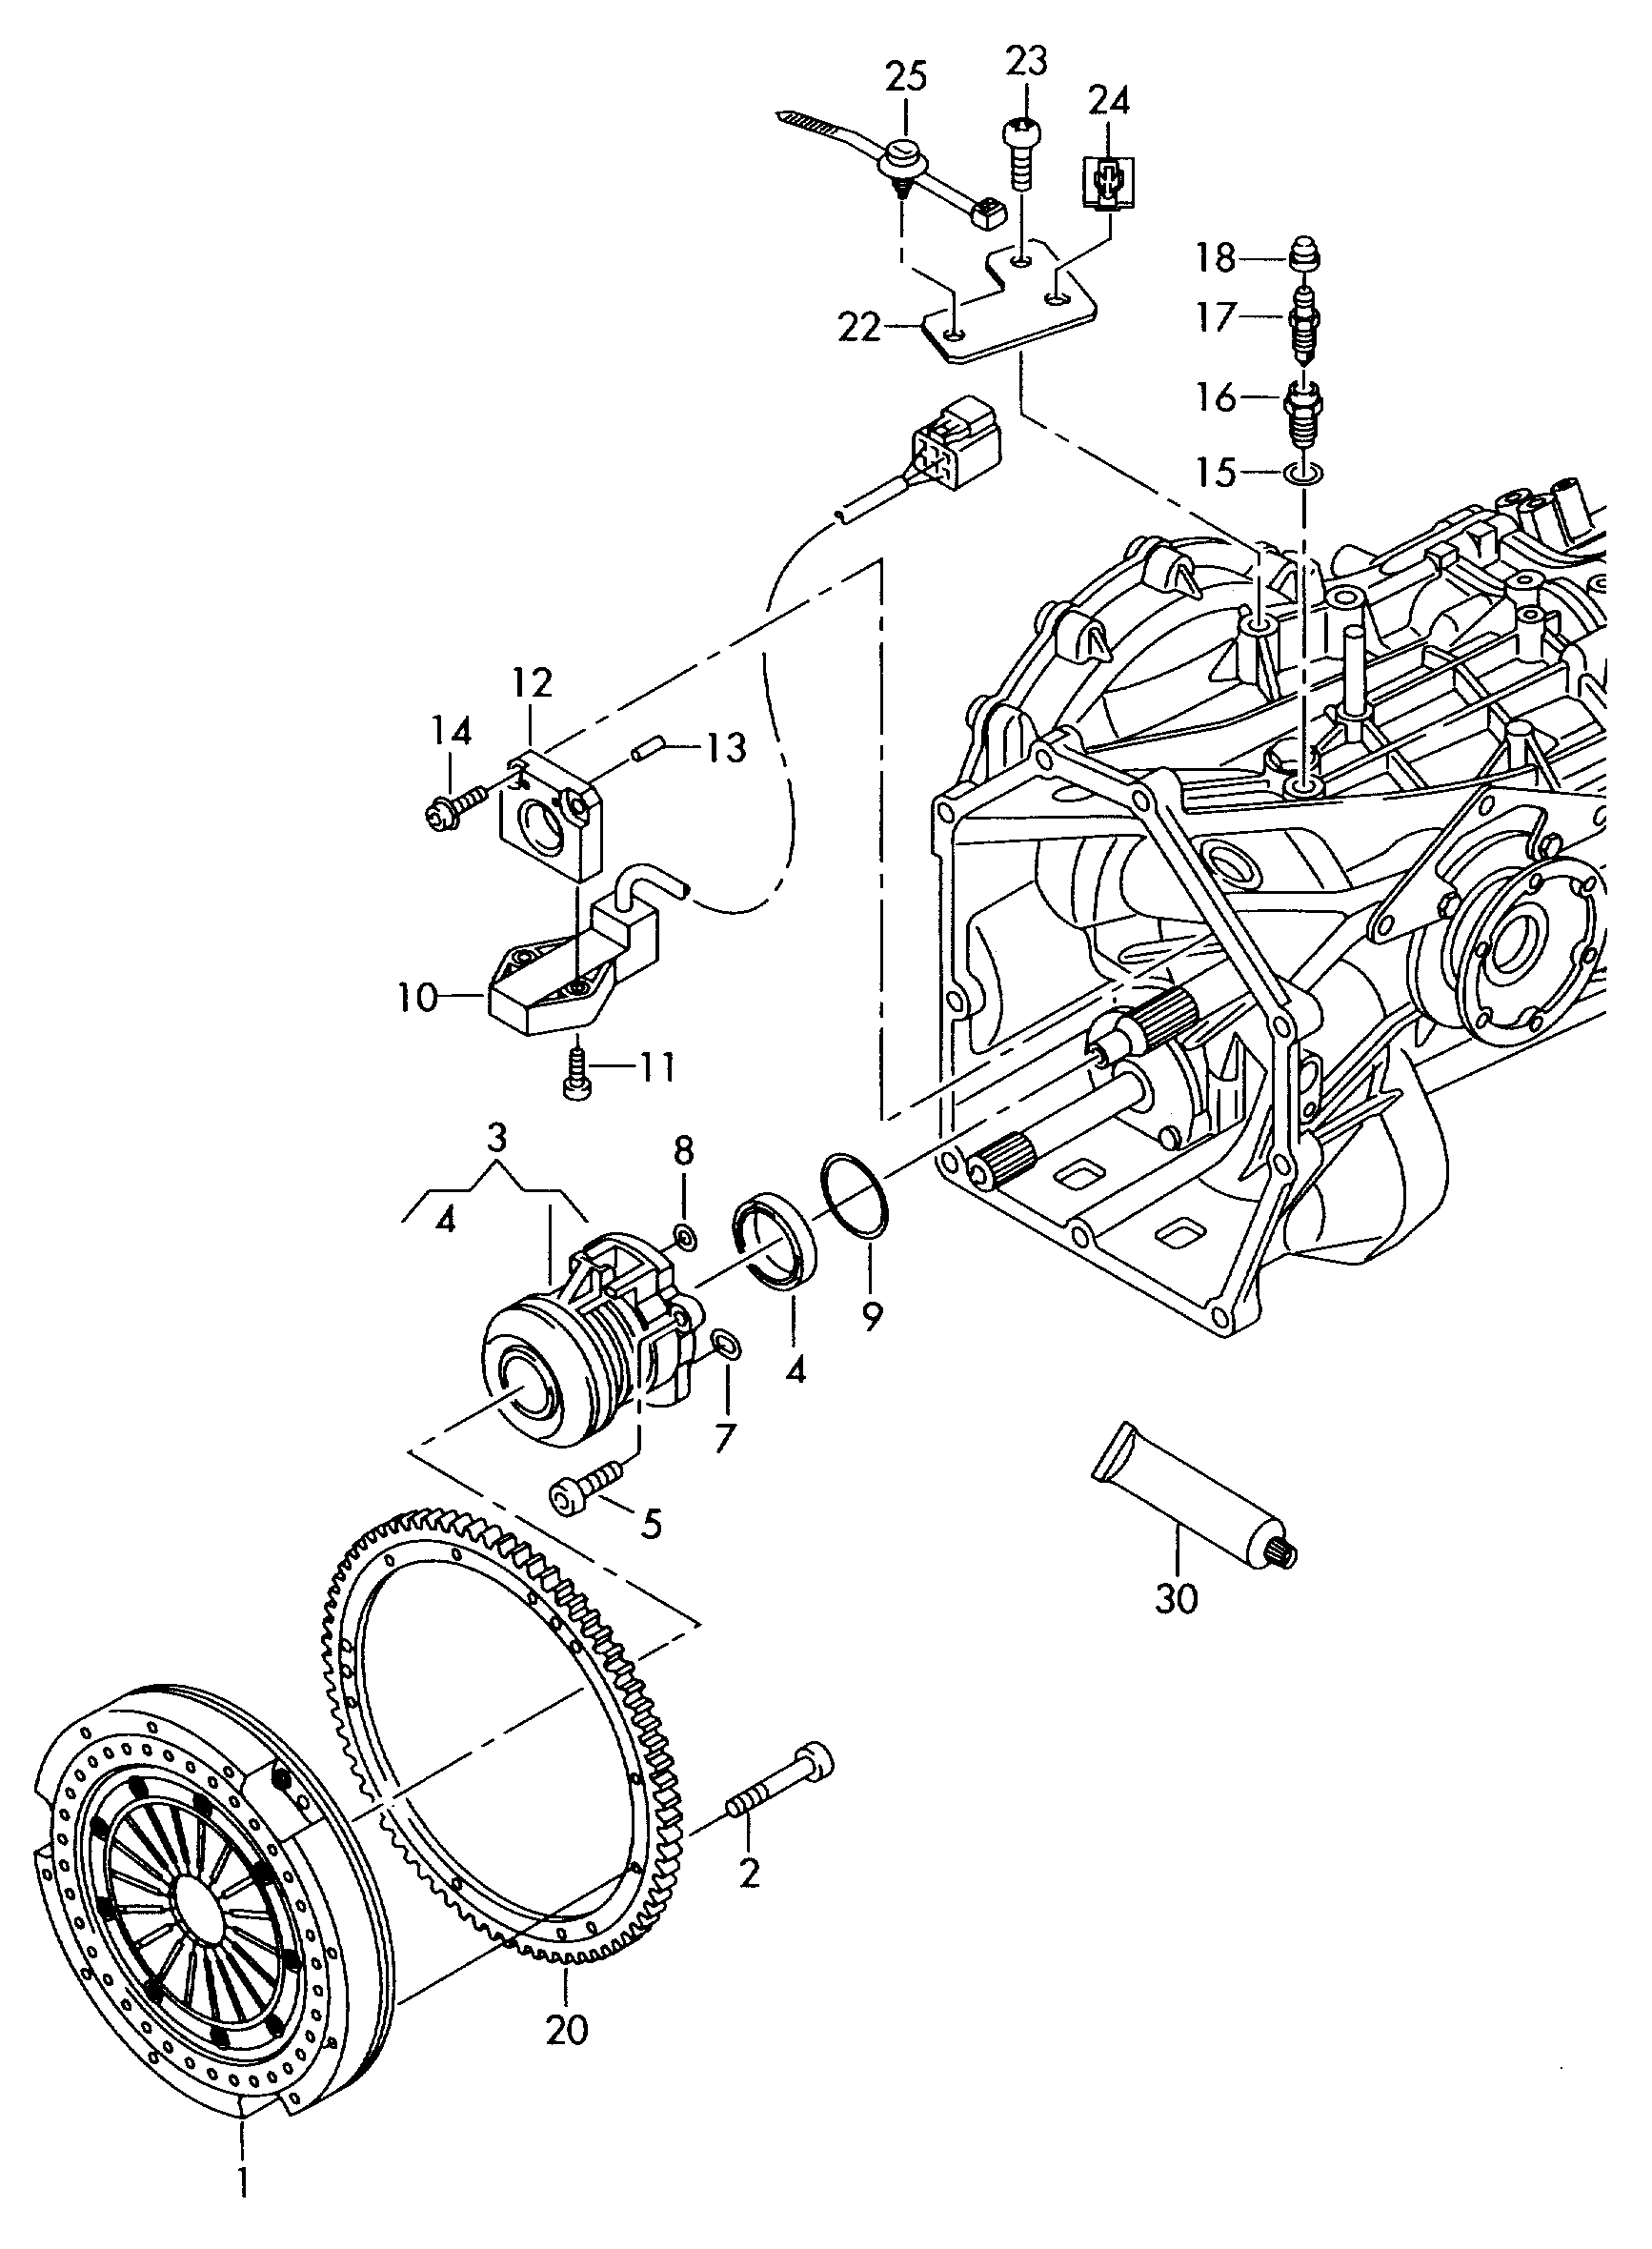 spojka; prevodovka mechanicka
automatizovana (r t... - Audi R8(R8)  